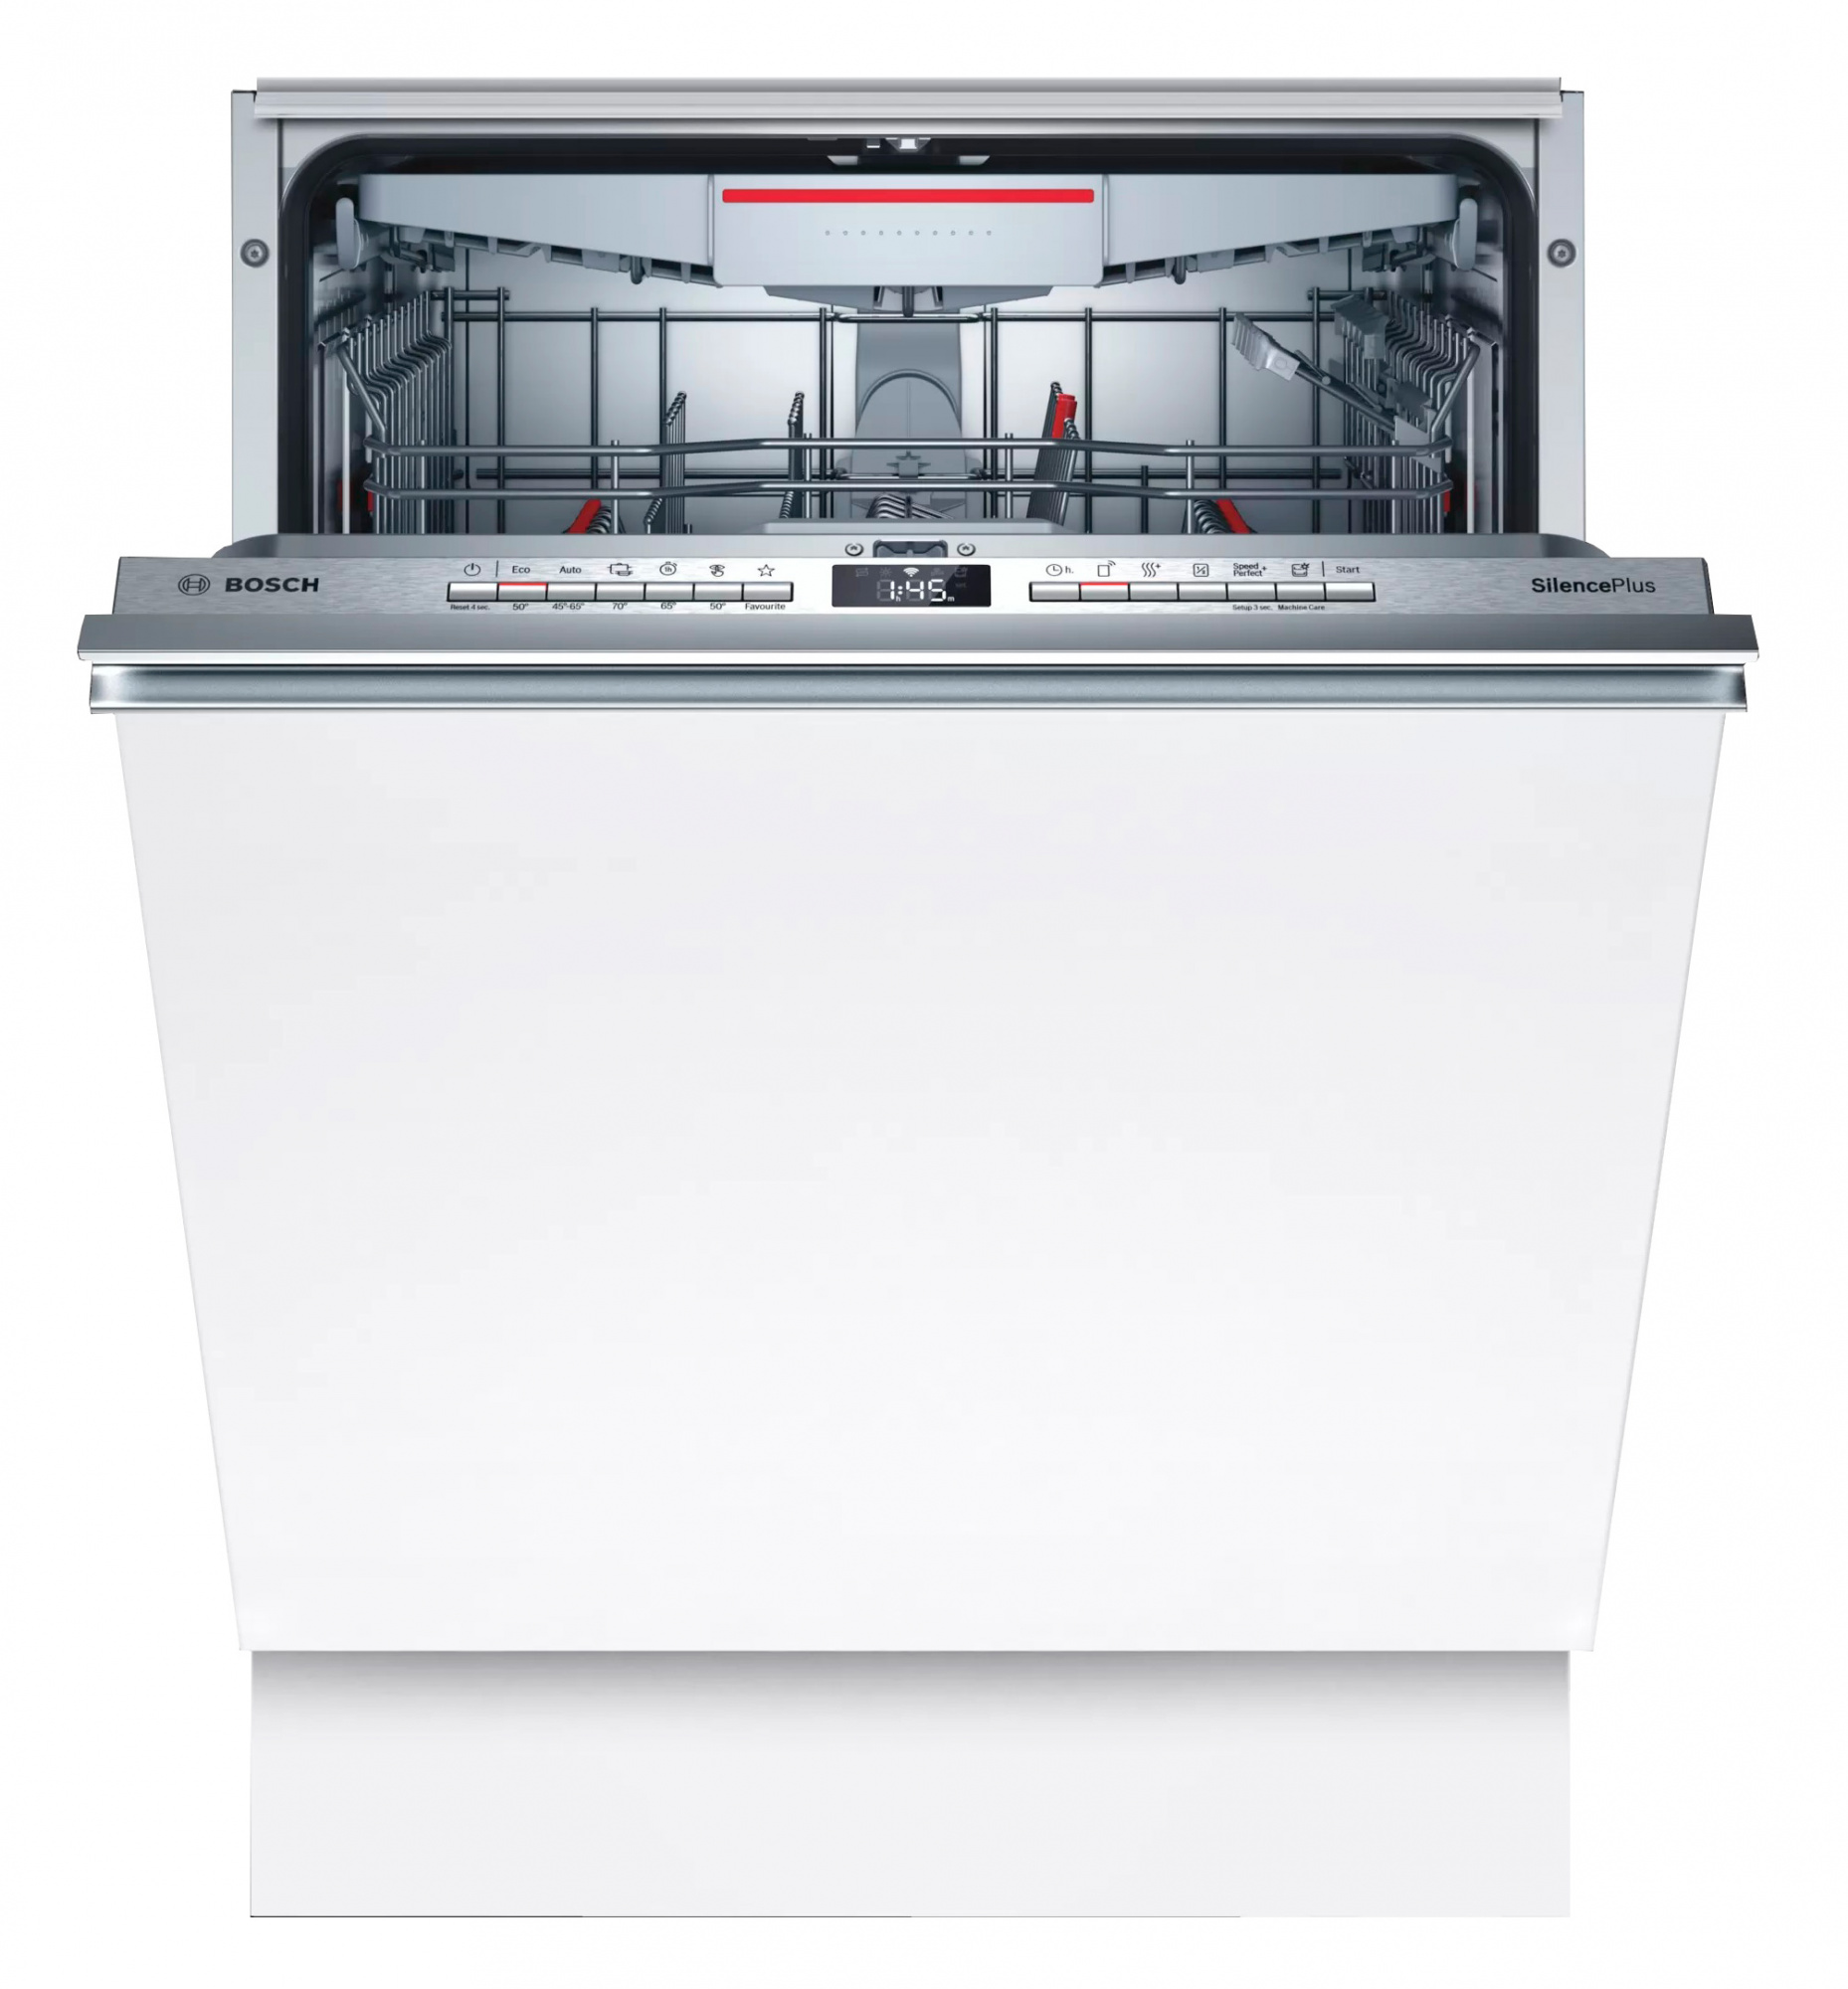 Встраиваемая посудомоечная машина Bosch SMV4HCX52E посудомоечная машина встраив bosch smv2itx22e полноразмерная